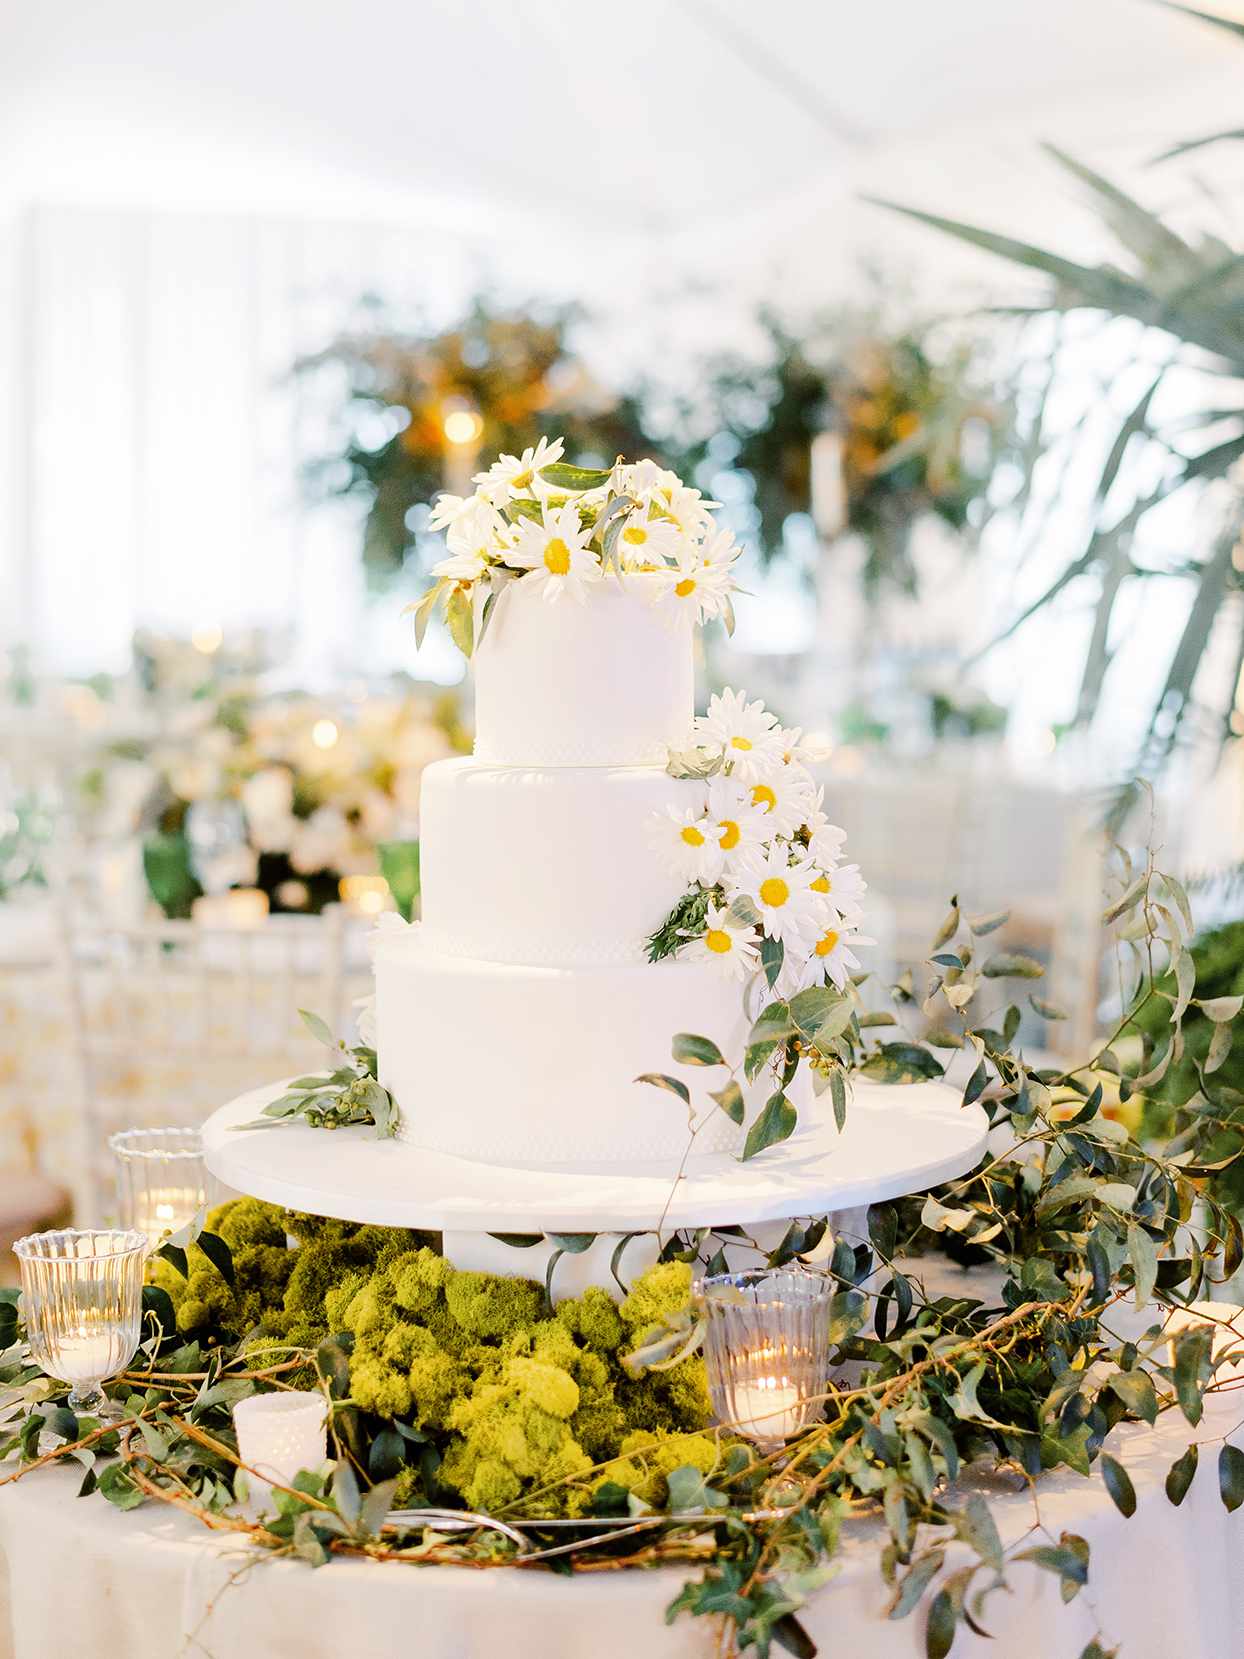 sofia alberto wedding cake on table